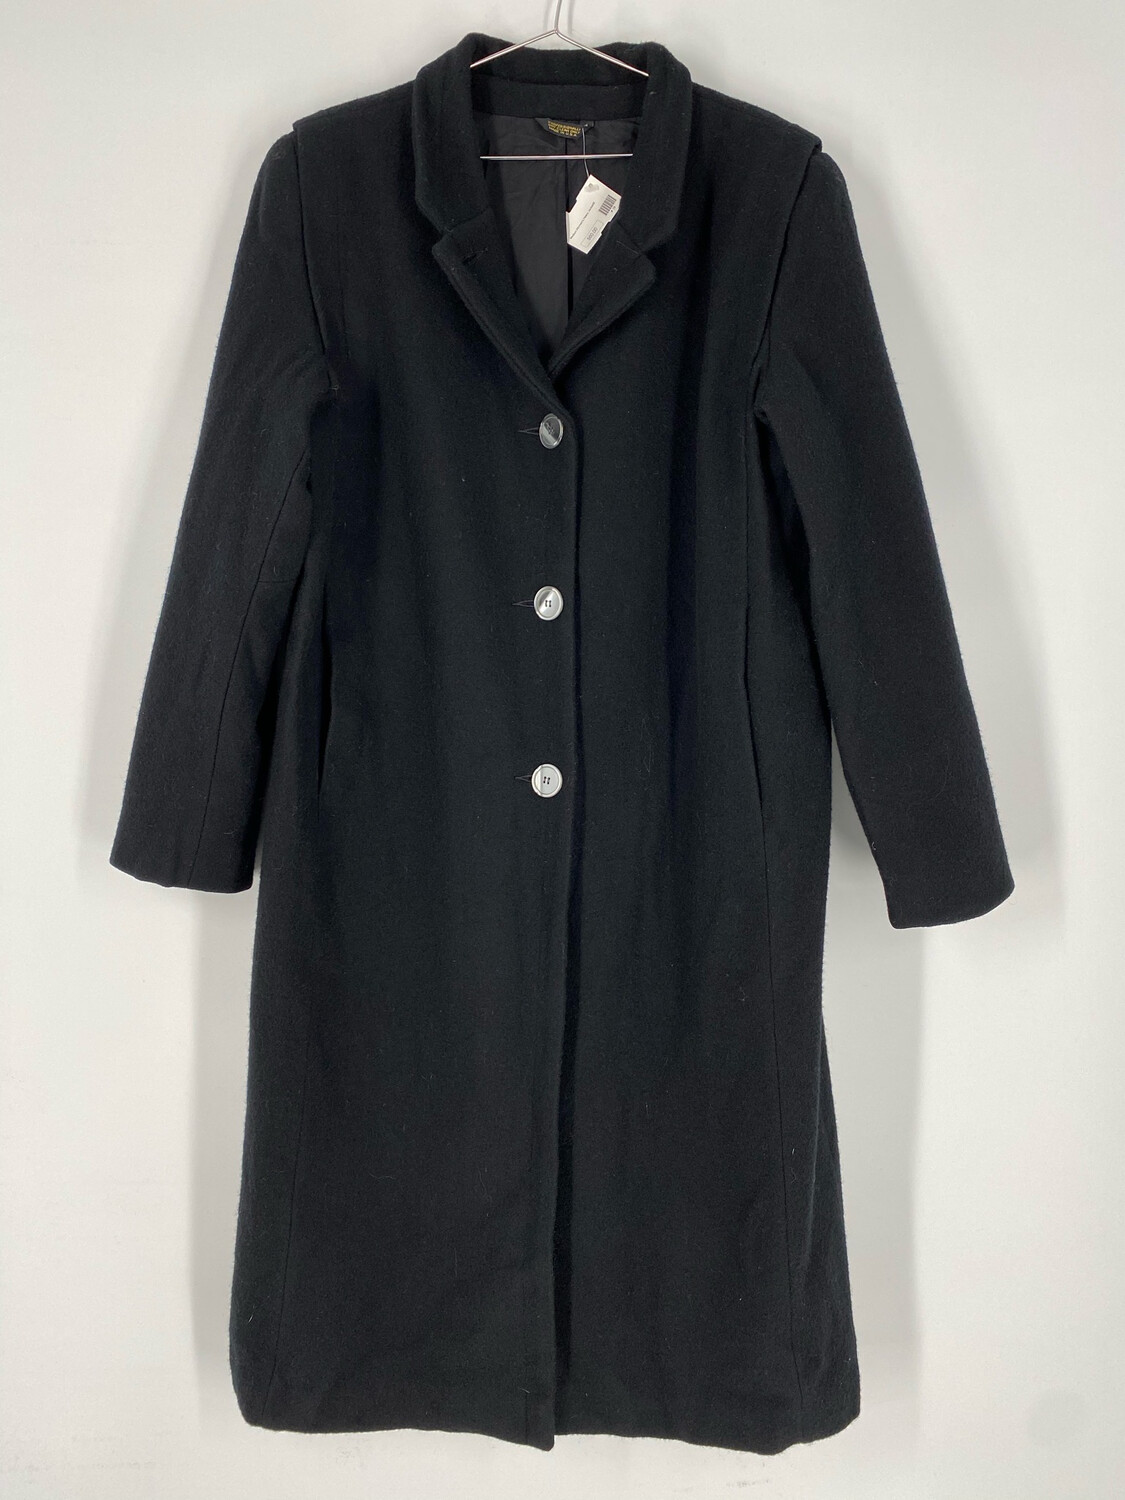 Long Black Wool Coat Size M